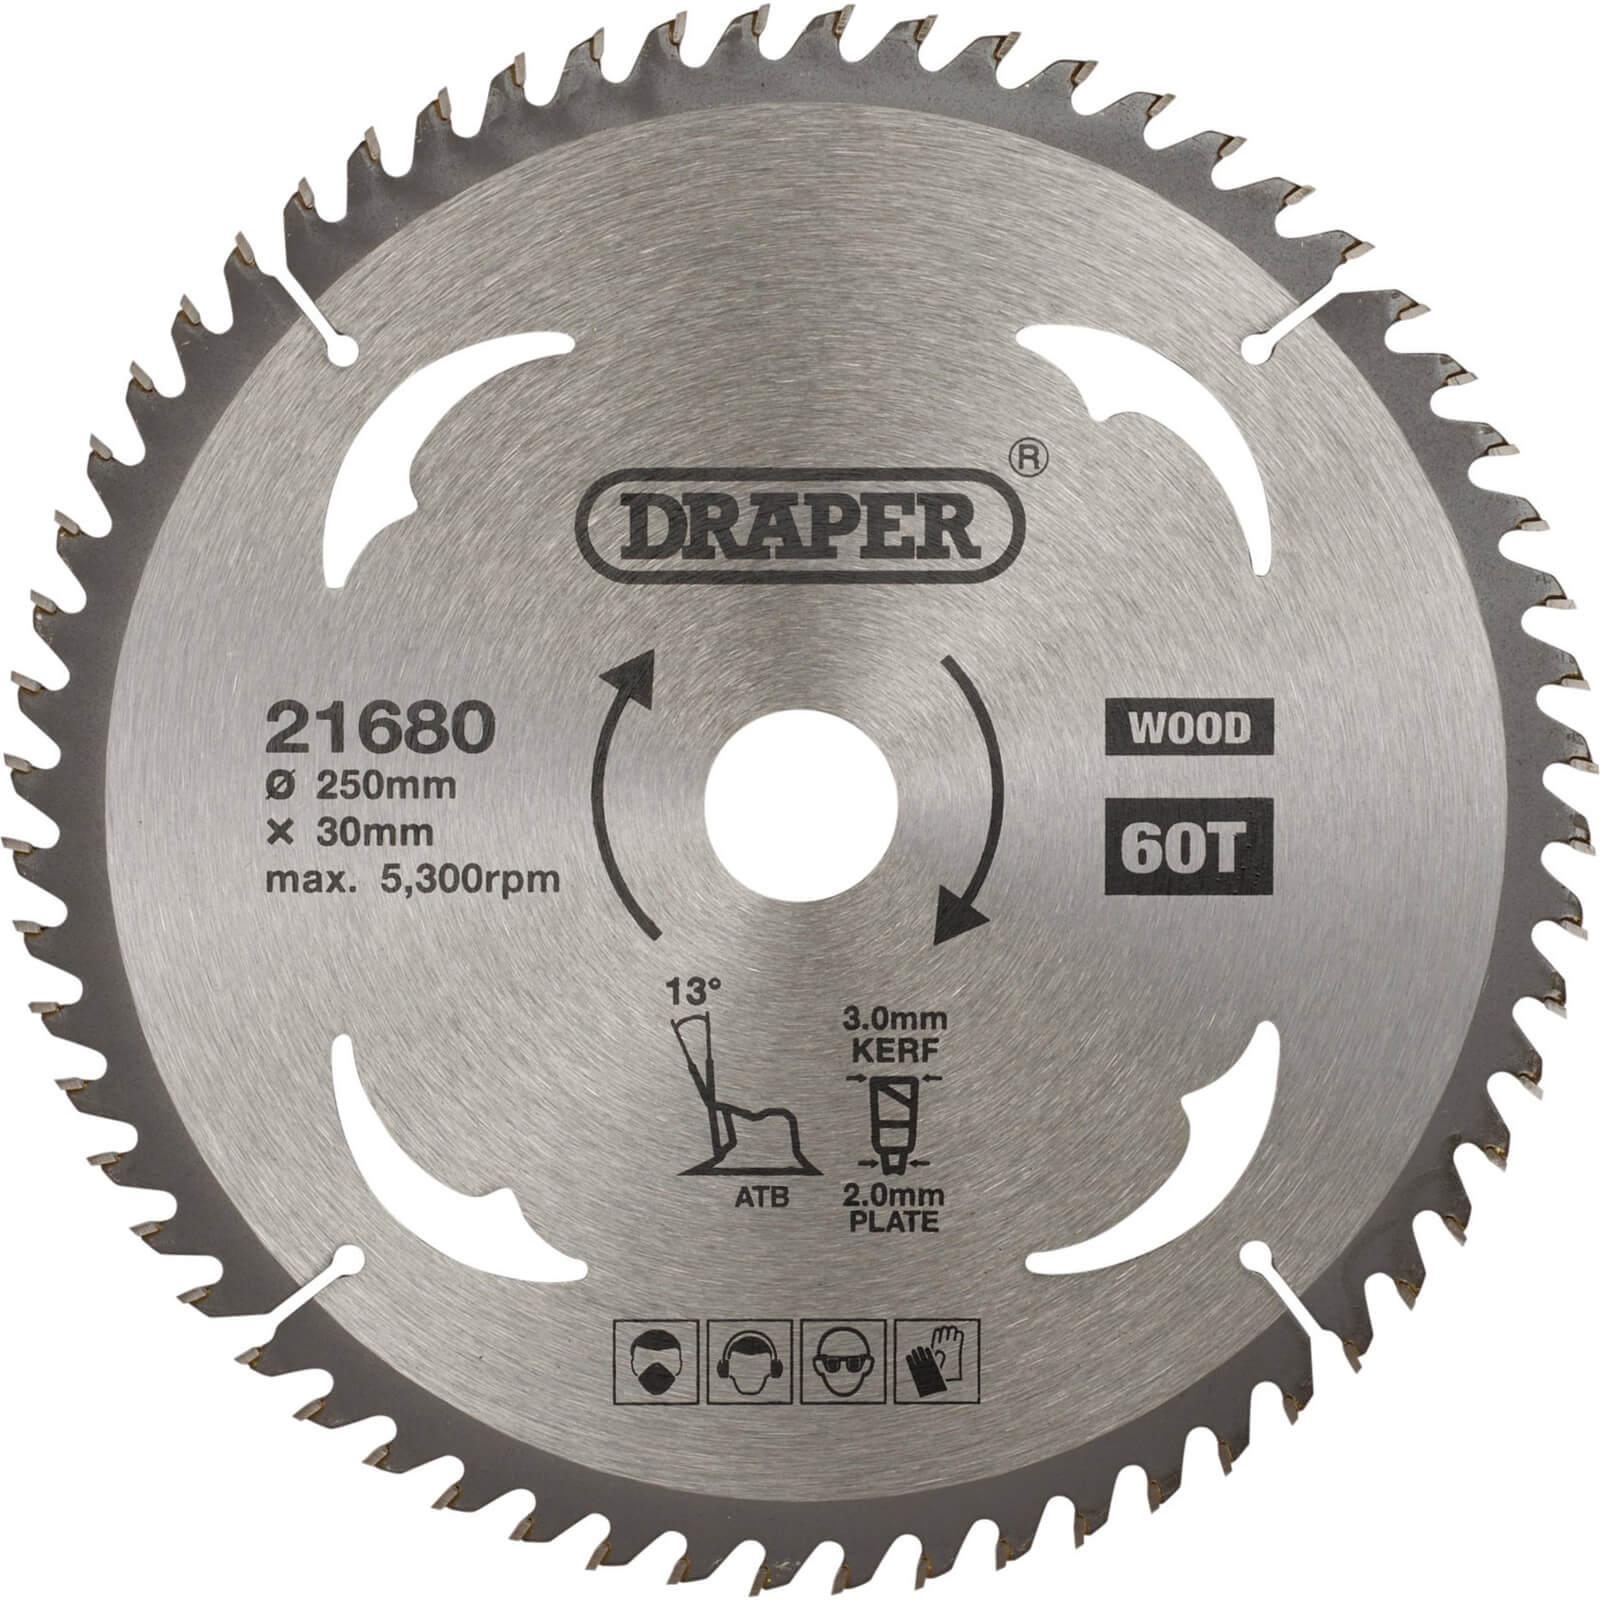 Image of Draper TCT Wood Cutting Circular Saw Blade 250mm 60T 30mm